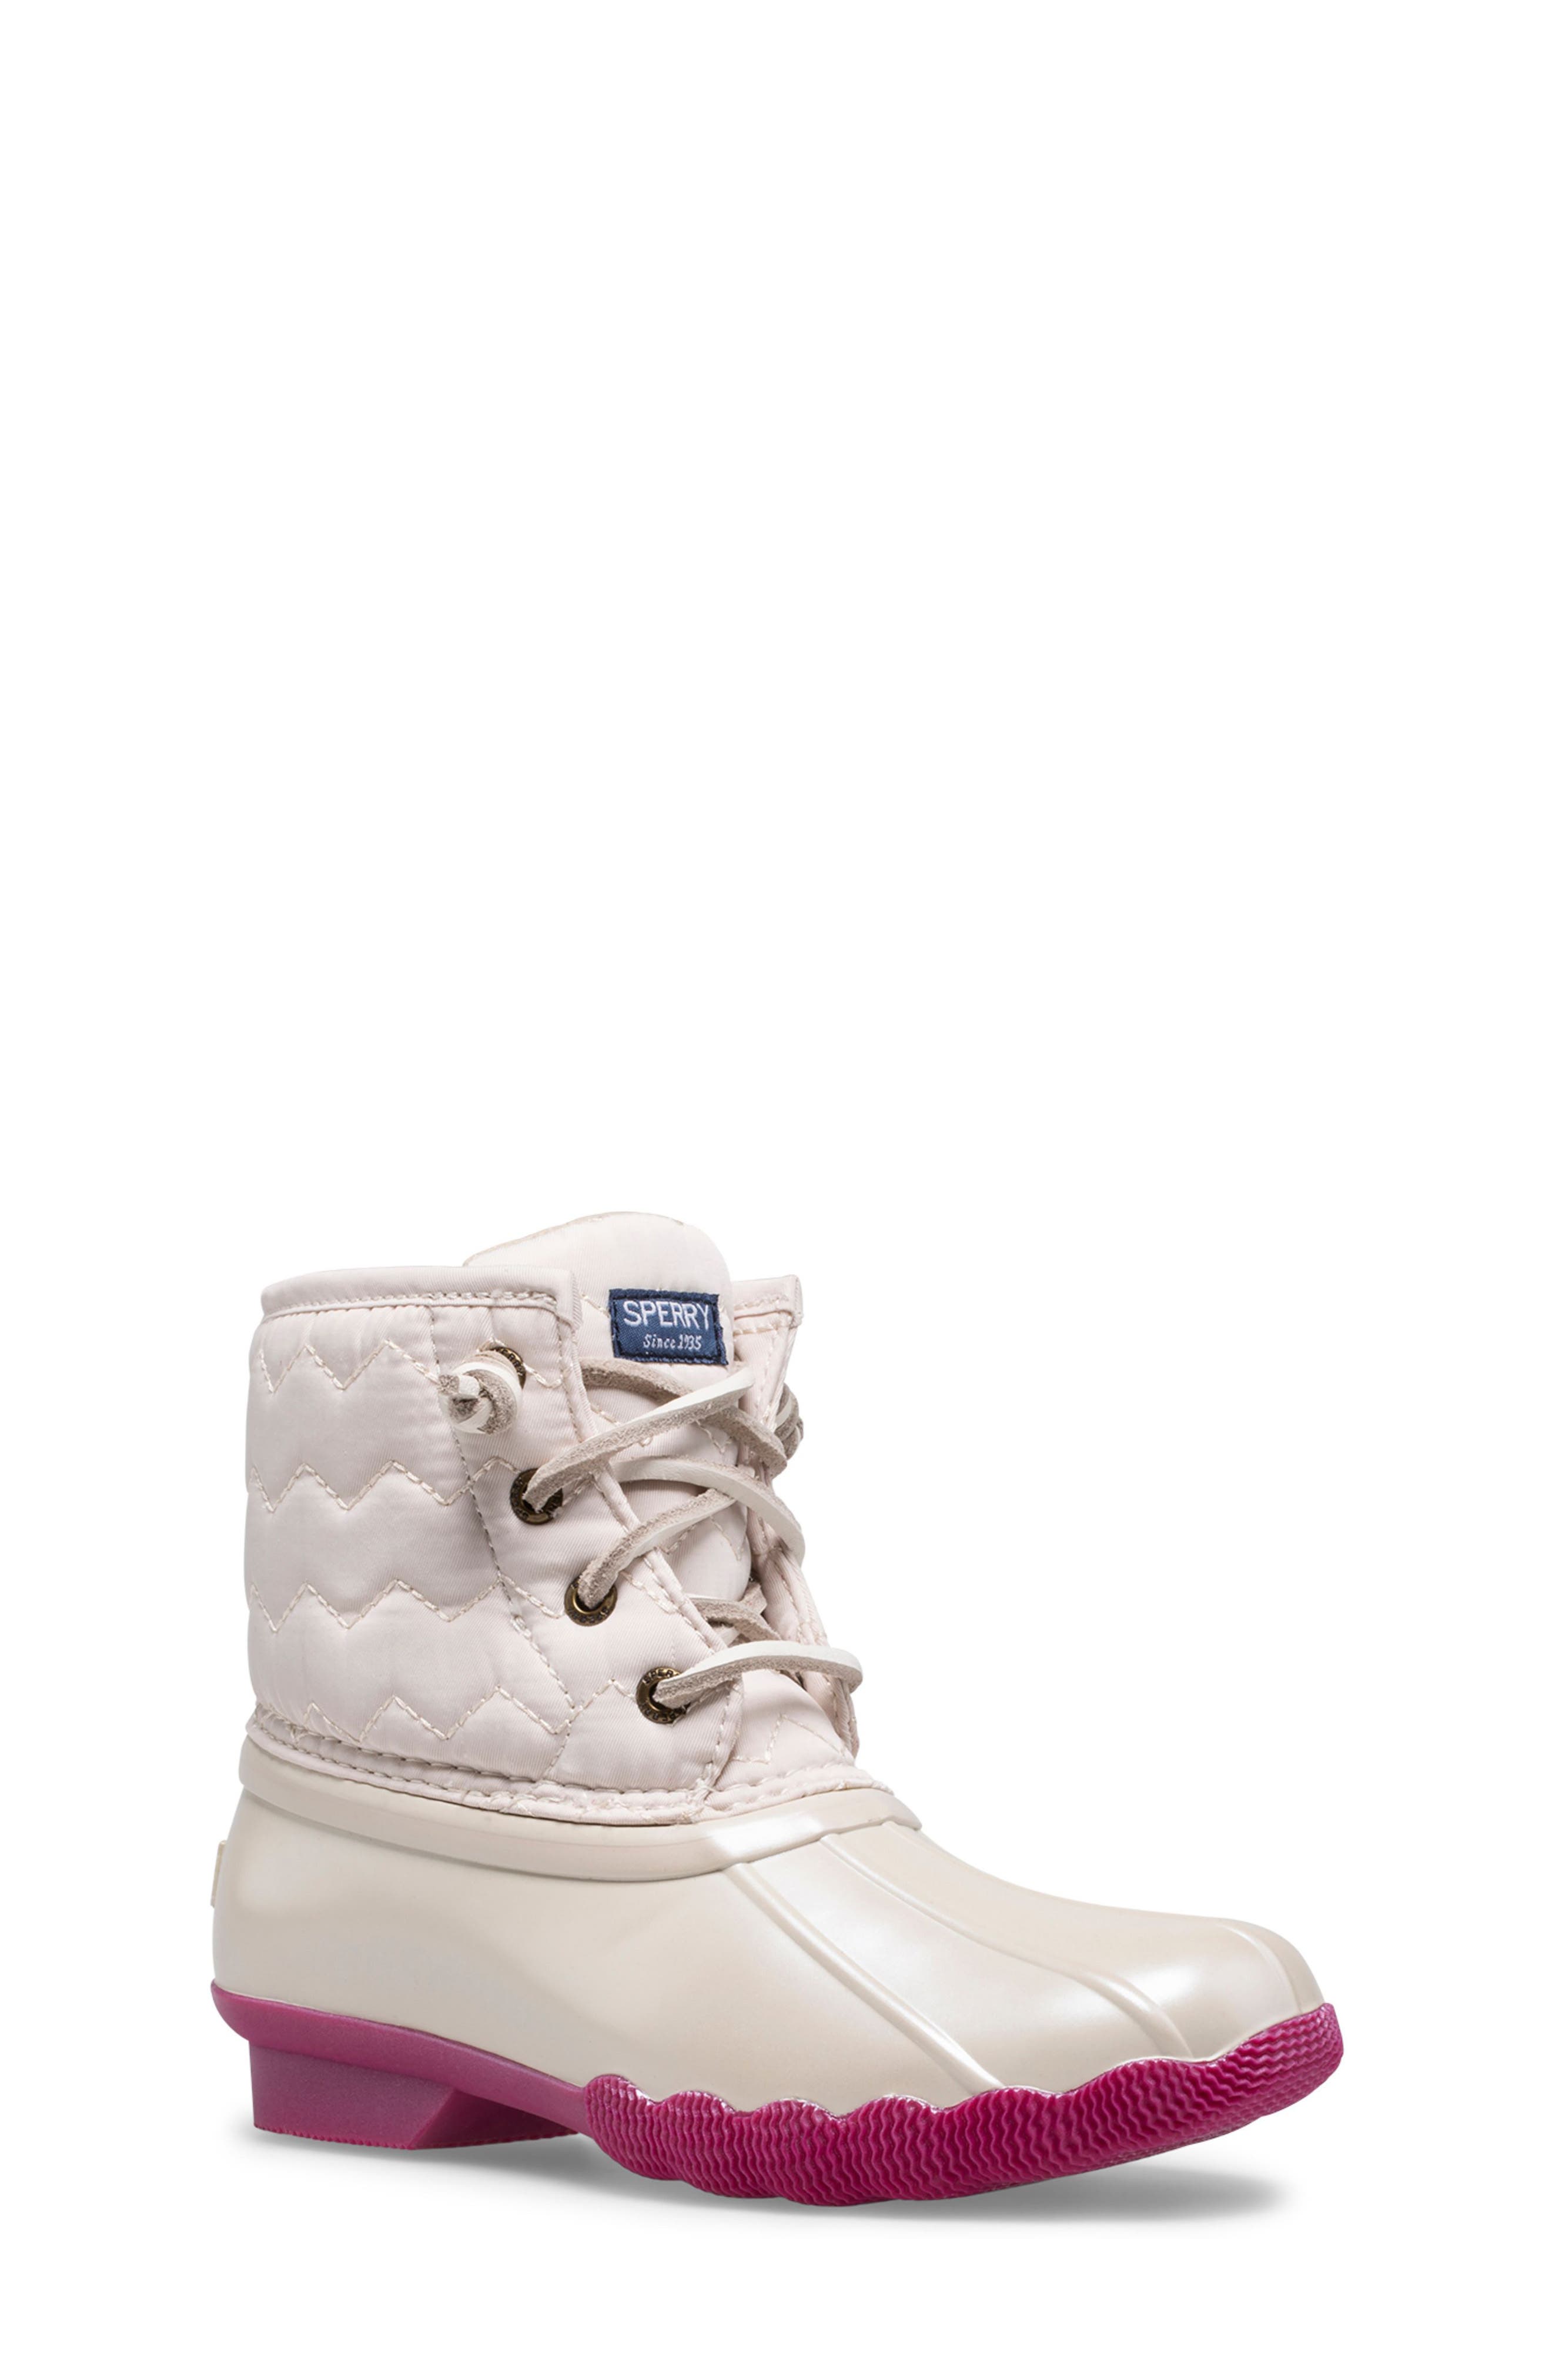 sperry snow boots girls